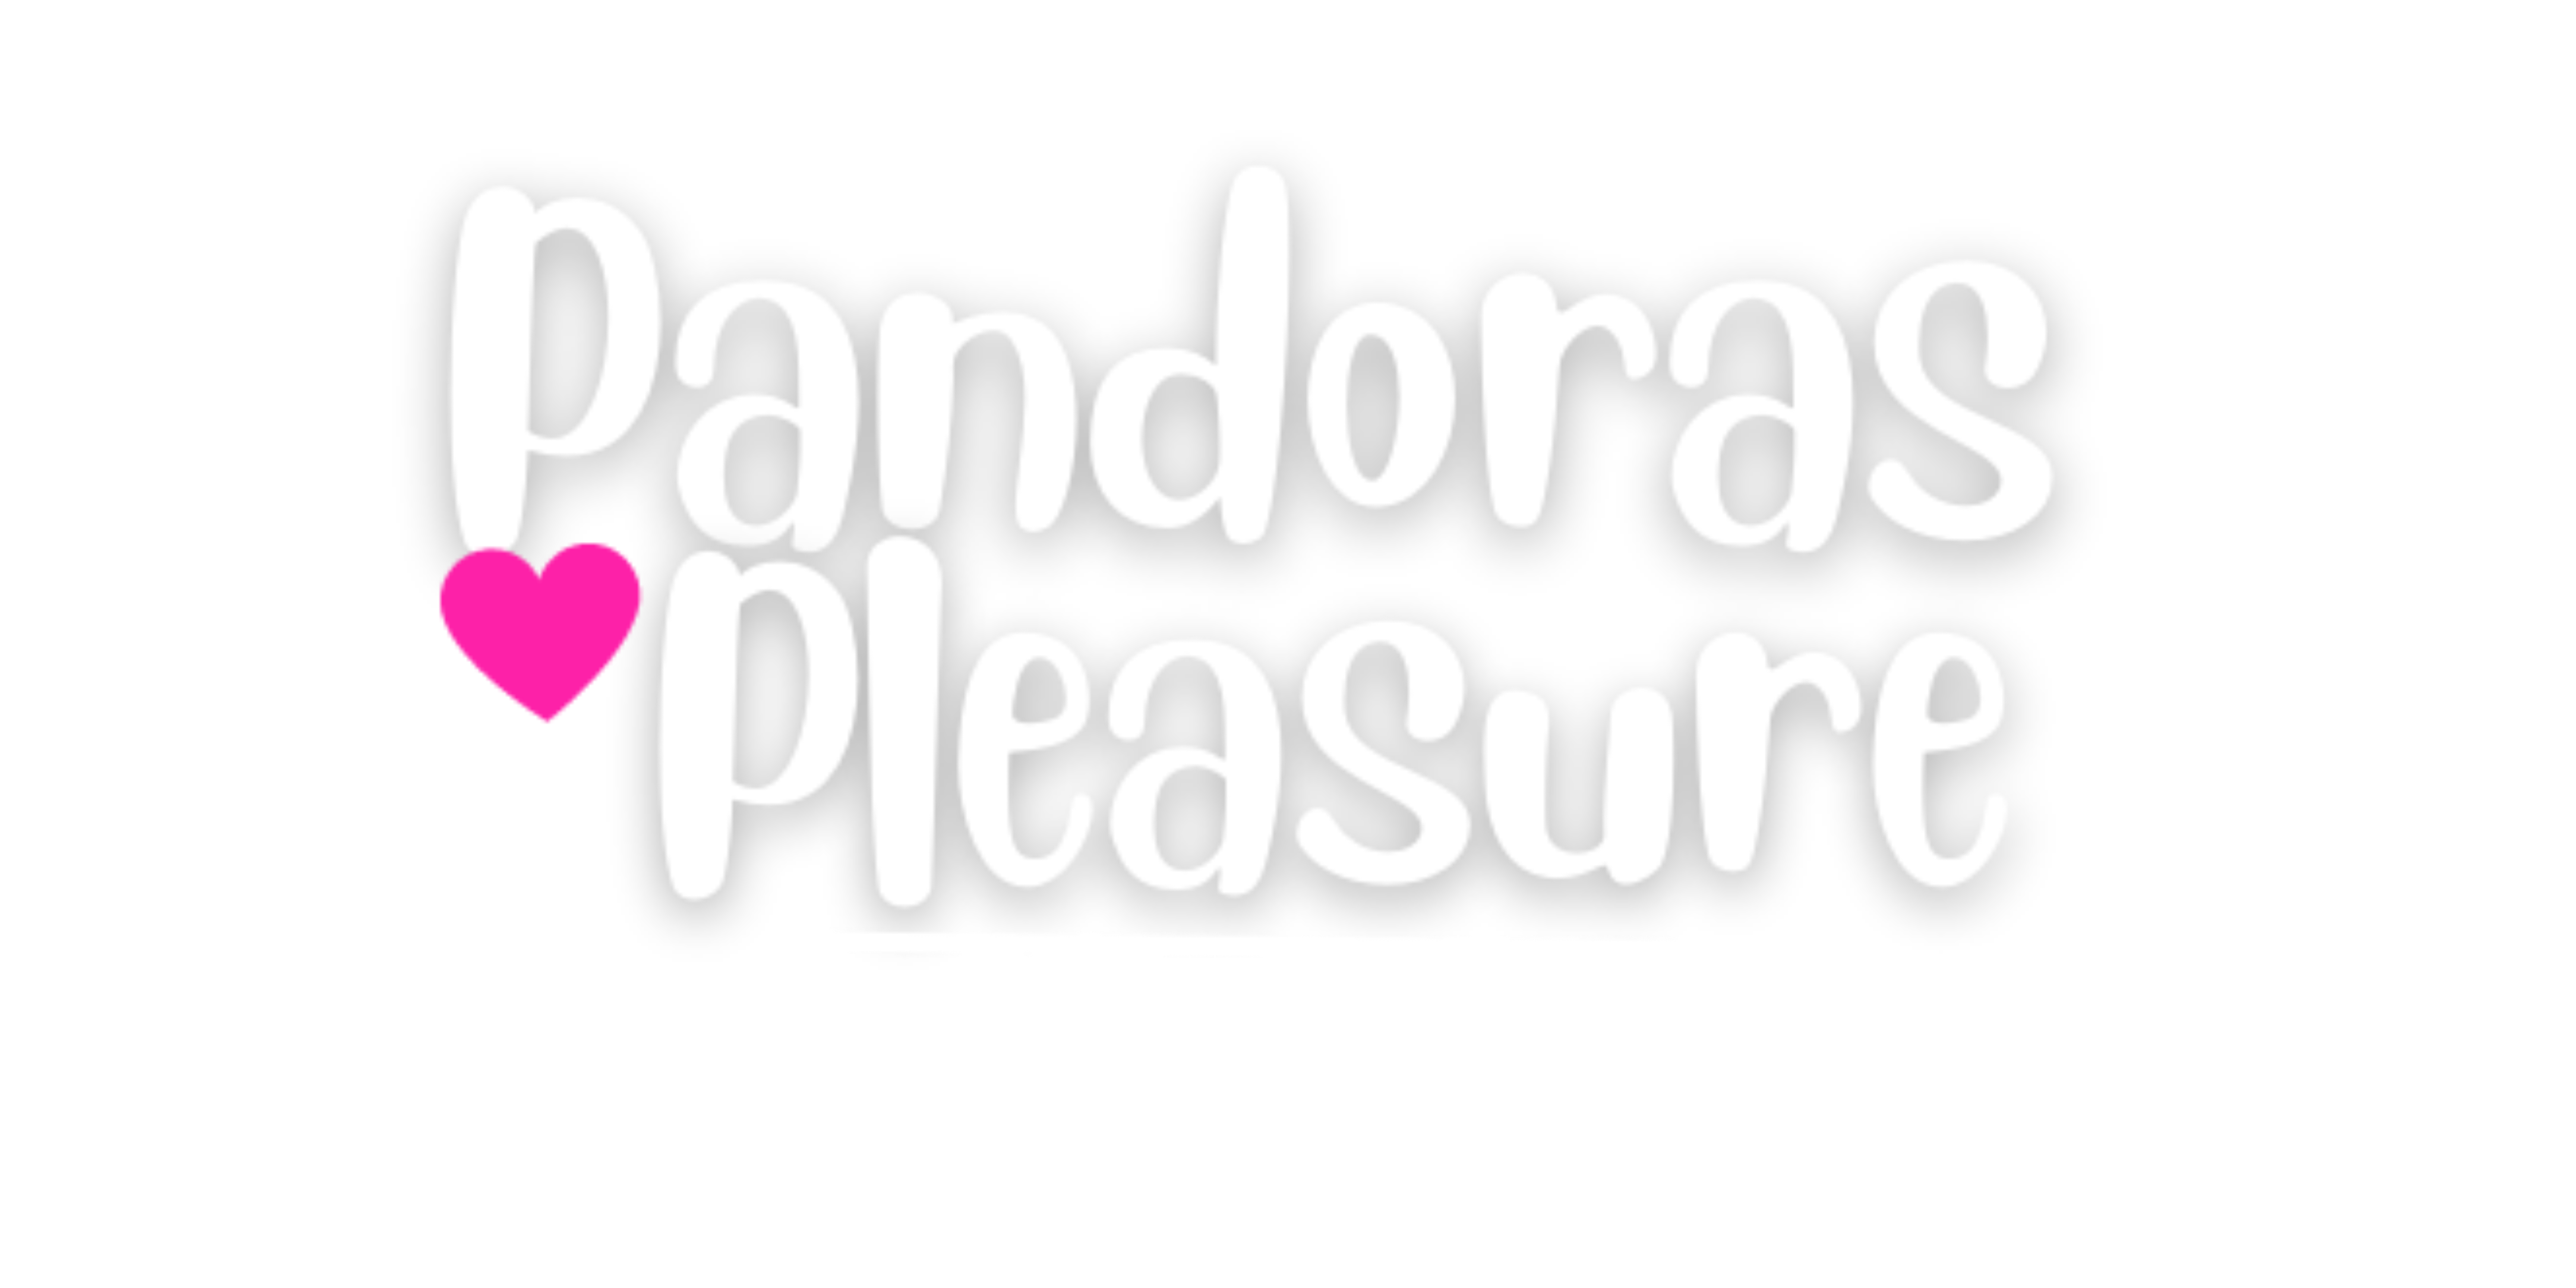 Pandoras Pleasures